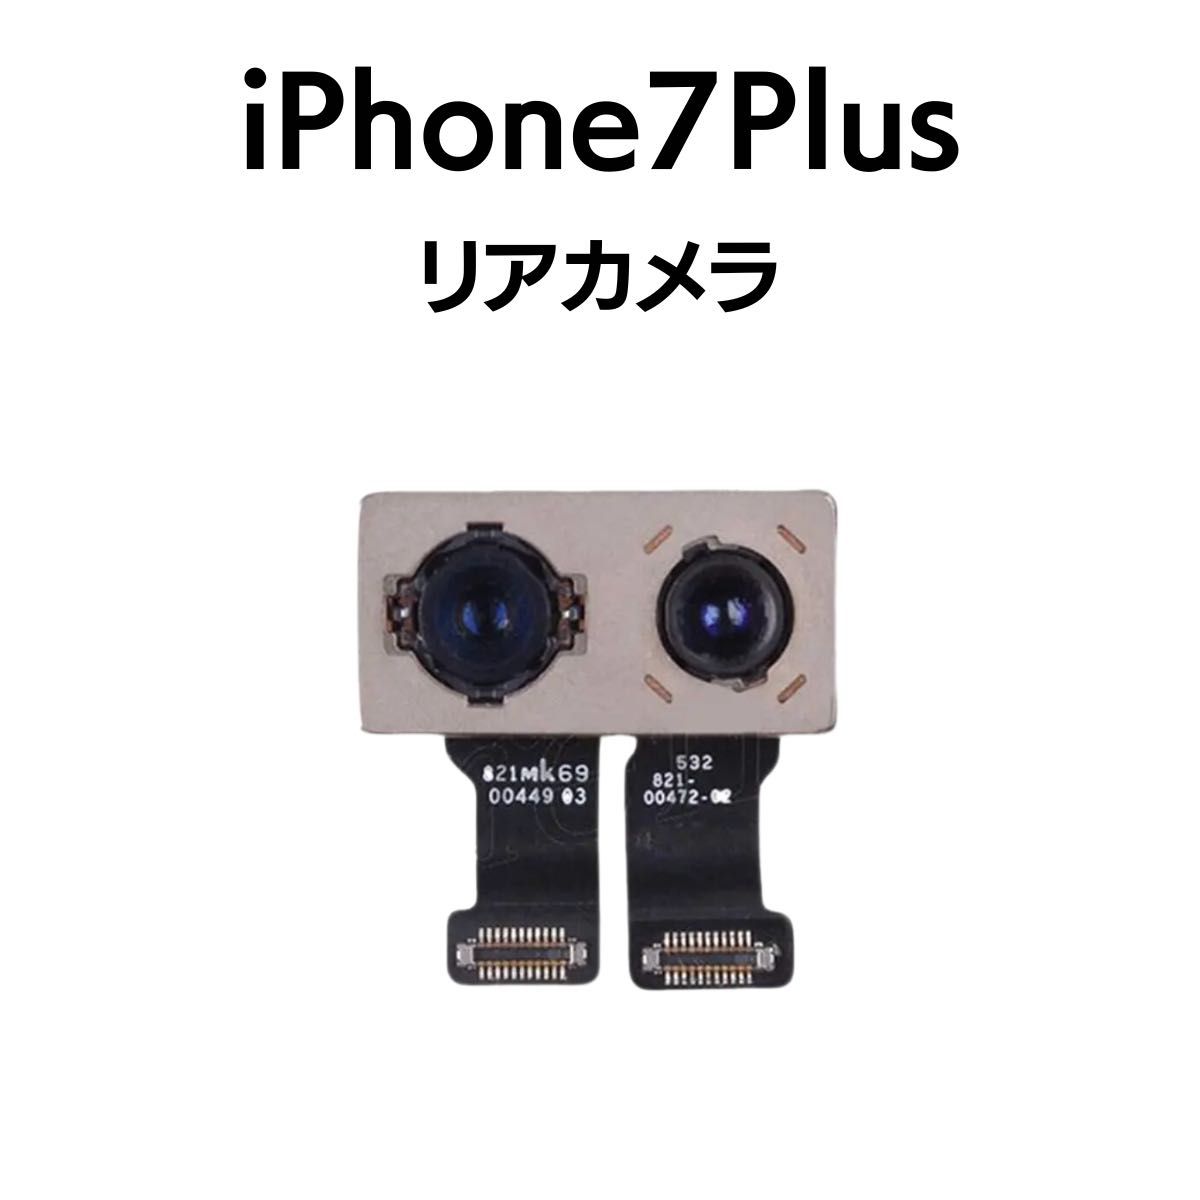 iPhone7Plusリアカメラ メイン リヤ リア バック アイフォン 交換 修理 背面 iSight カメラ 外 部品 パーツ